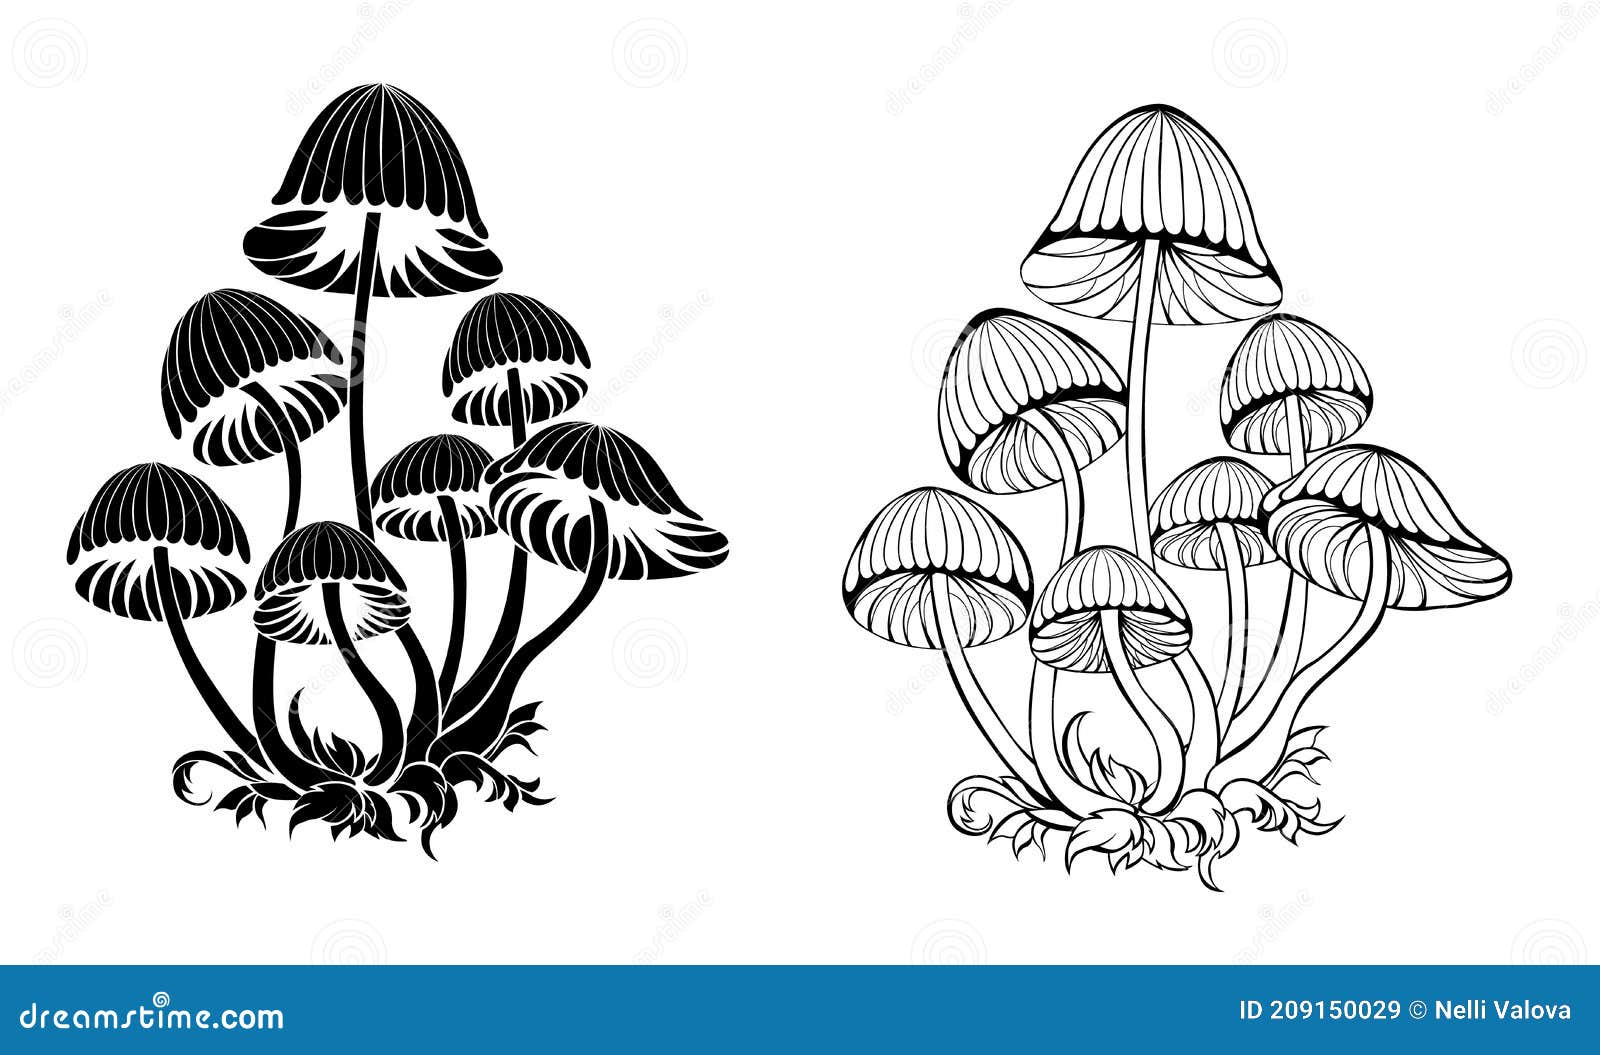 silhouette hallucinogenic mushrooms on white background